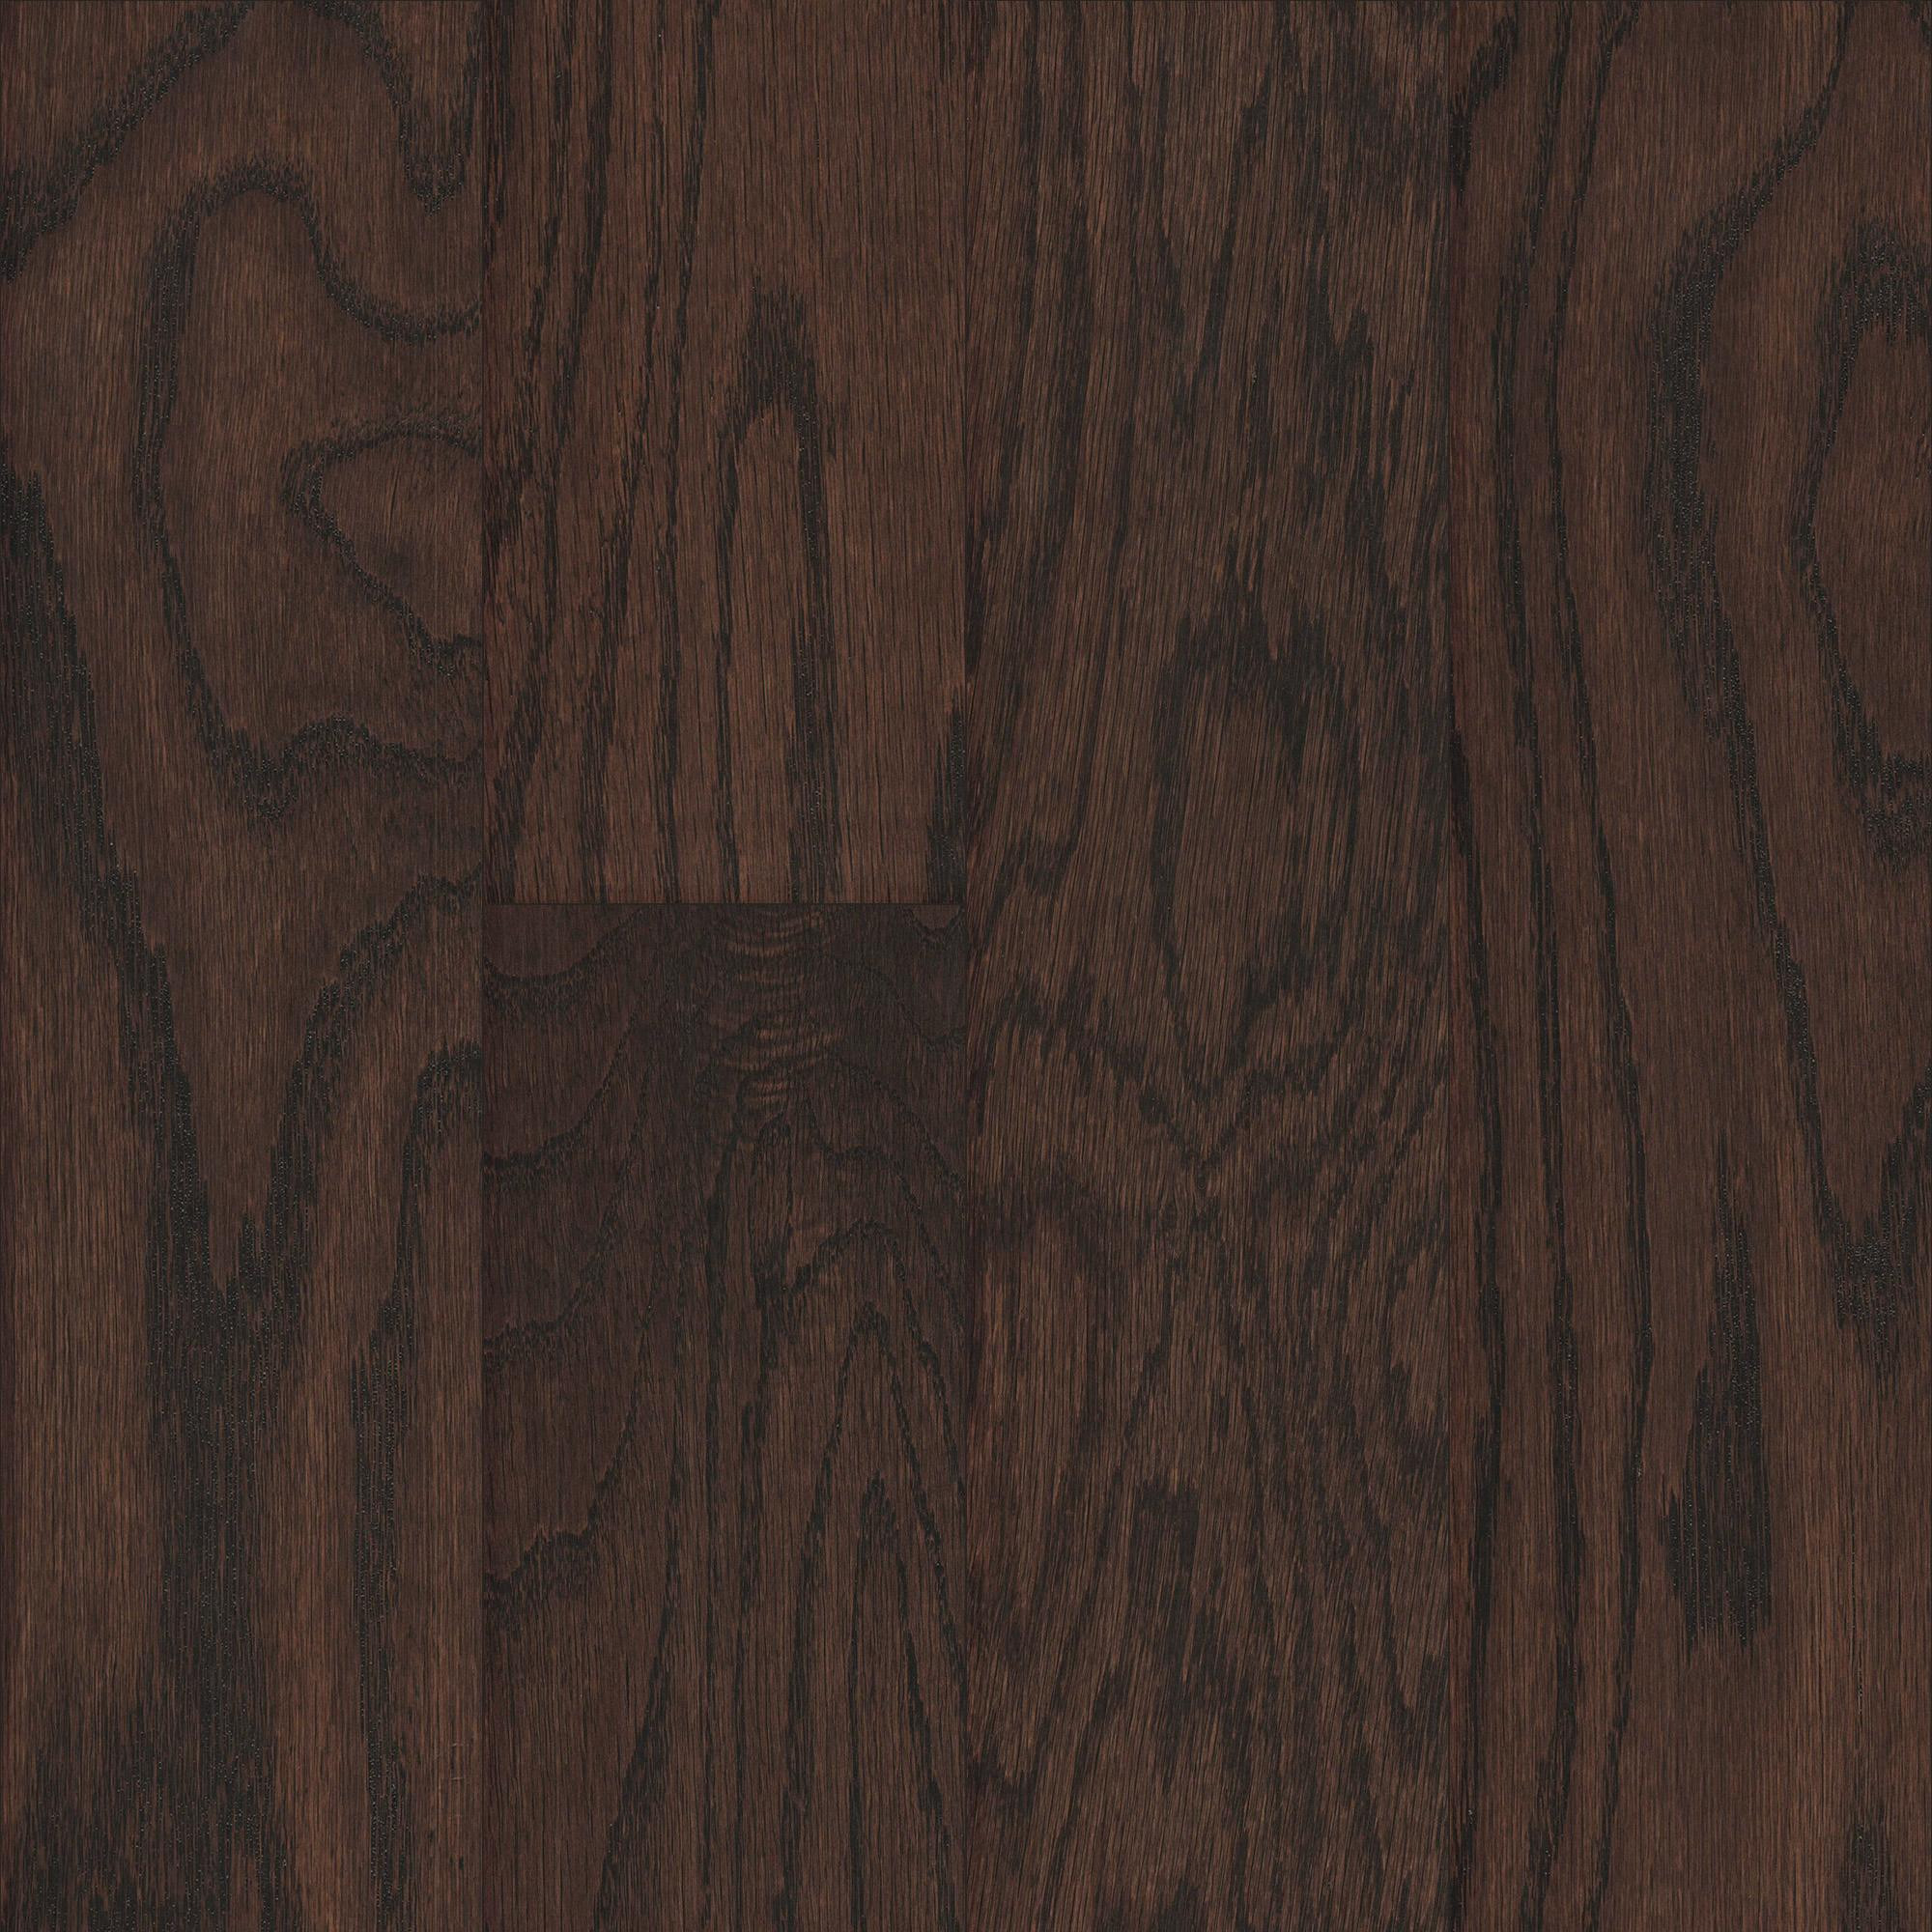 5 inch walnut hardwood flooring of mullican ridgecrest oak burnt umber 1 2 thick 5 wide engineered within mullican ridgecrest oak burnt umber 1 2 thick 5 wide engineered hardwood flooring